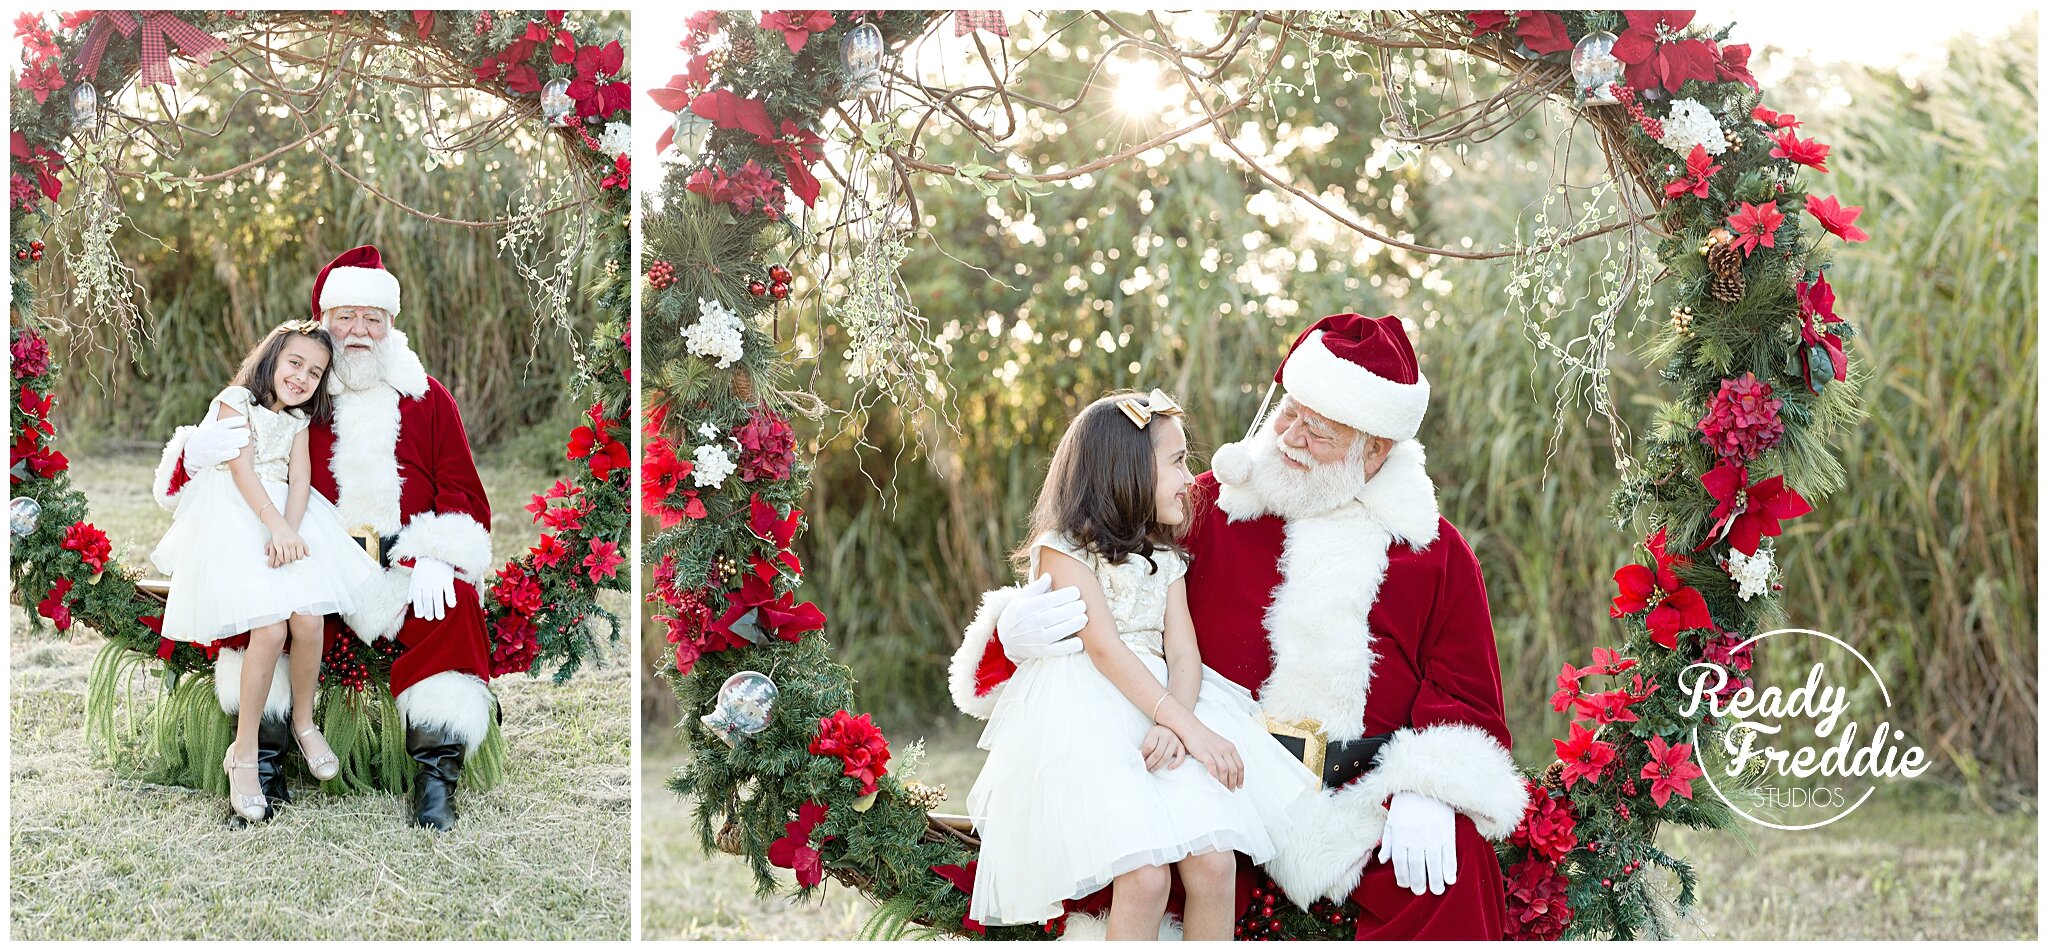 Outdoor Santa photos with giant wreath for Christmas with Ivanna Vidal Photography